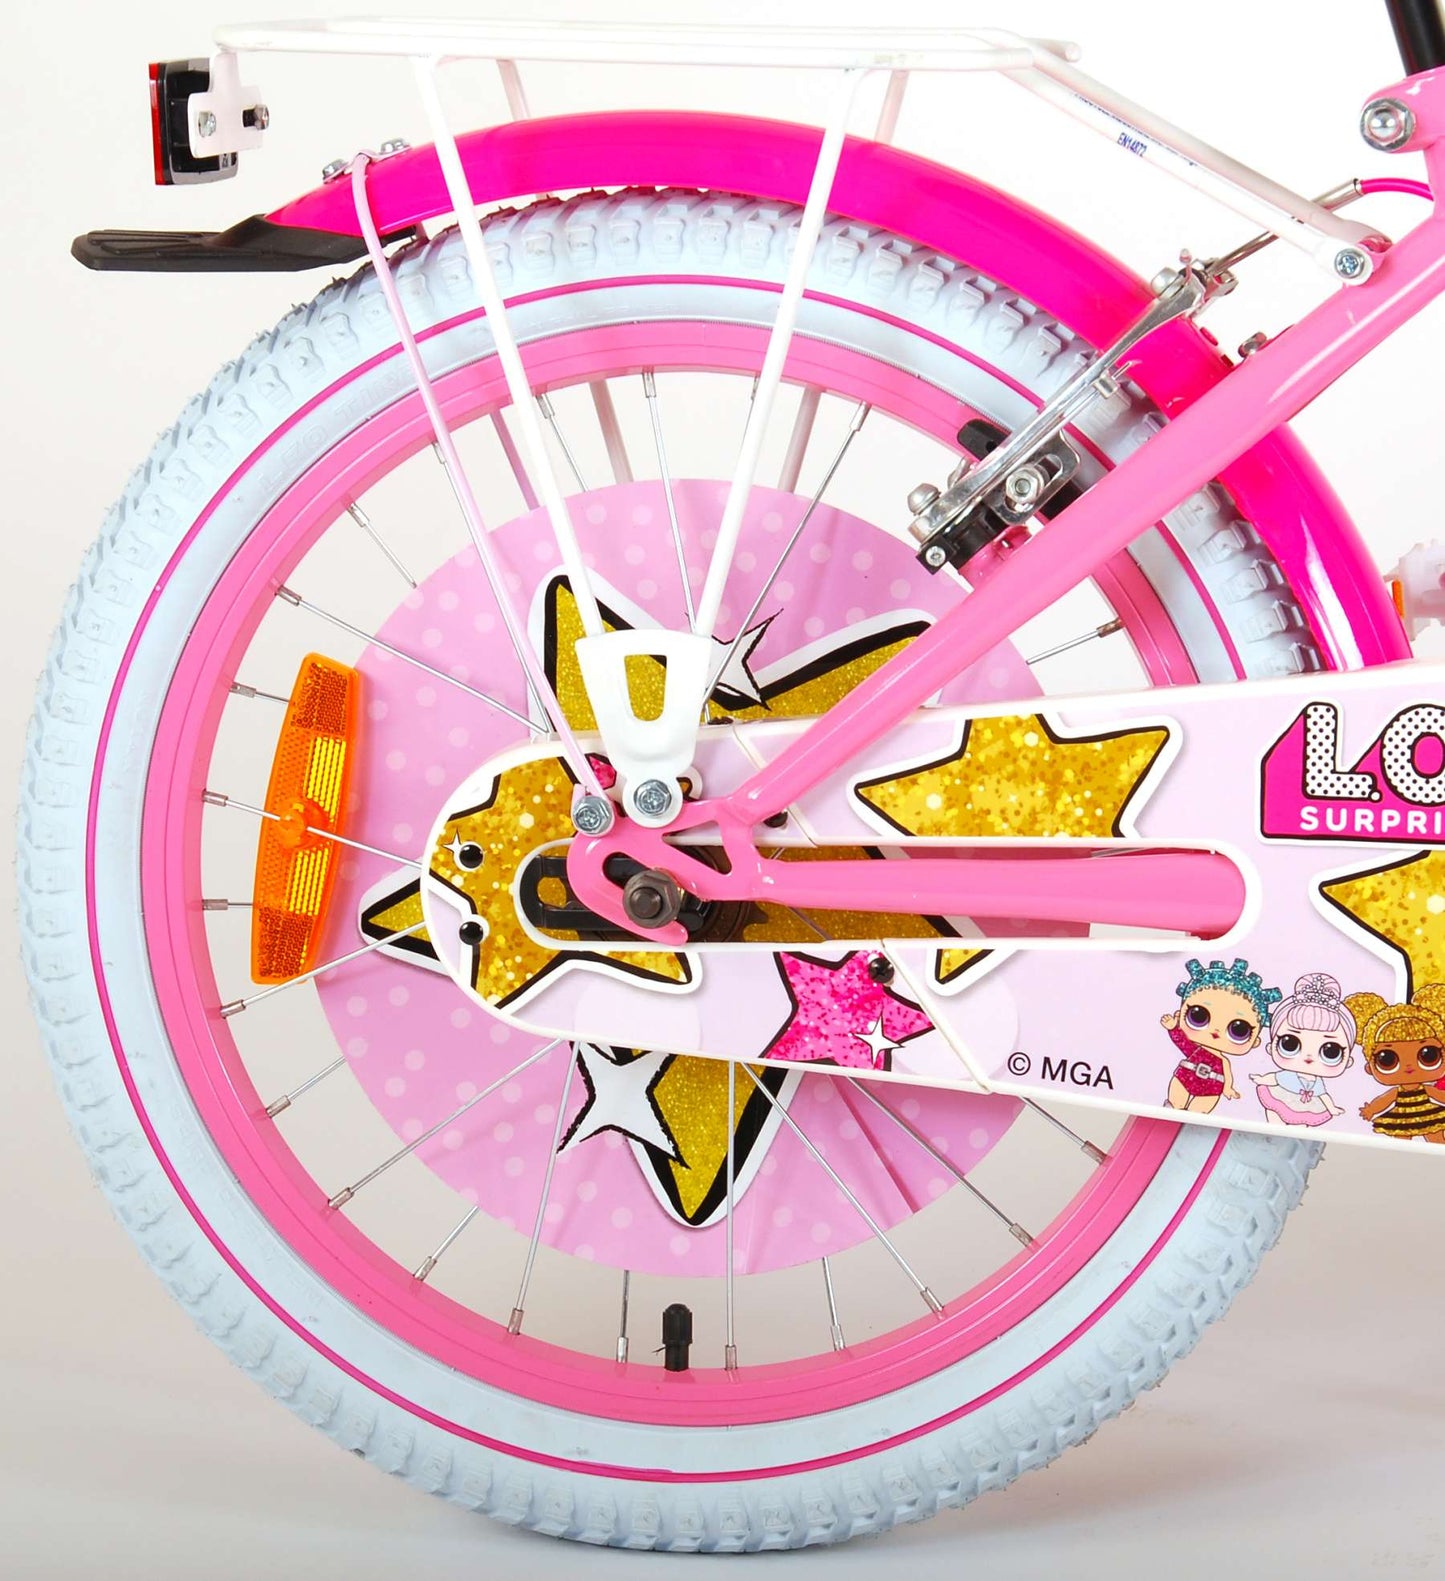 LOL Surprish Children's Bicycle - Girls - 18 pollici - Pink - Due freni a mano